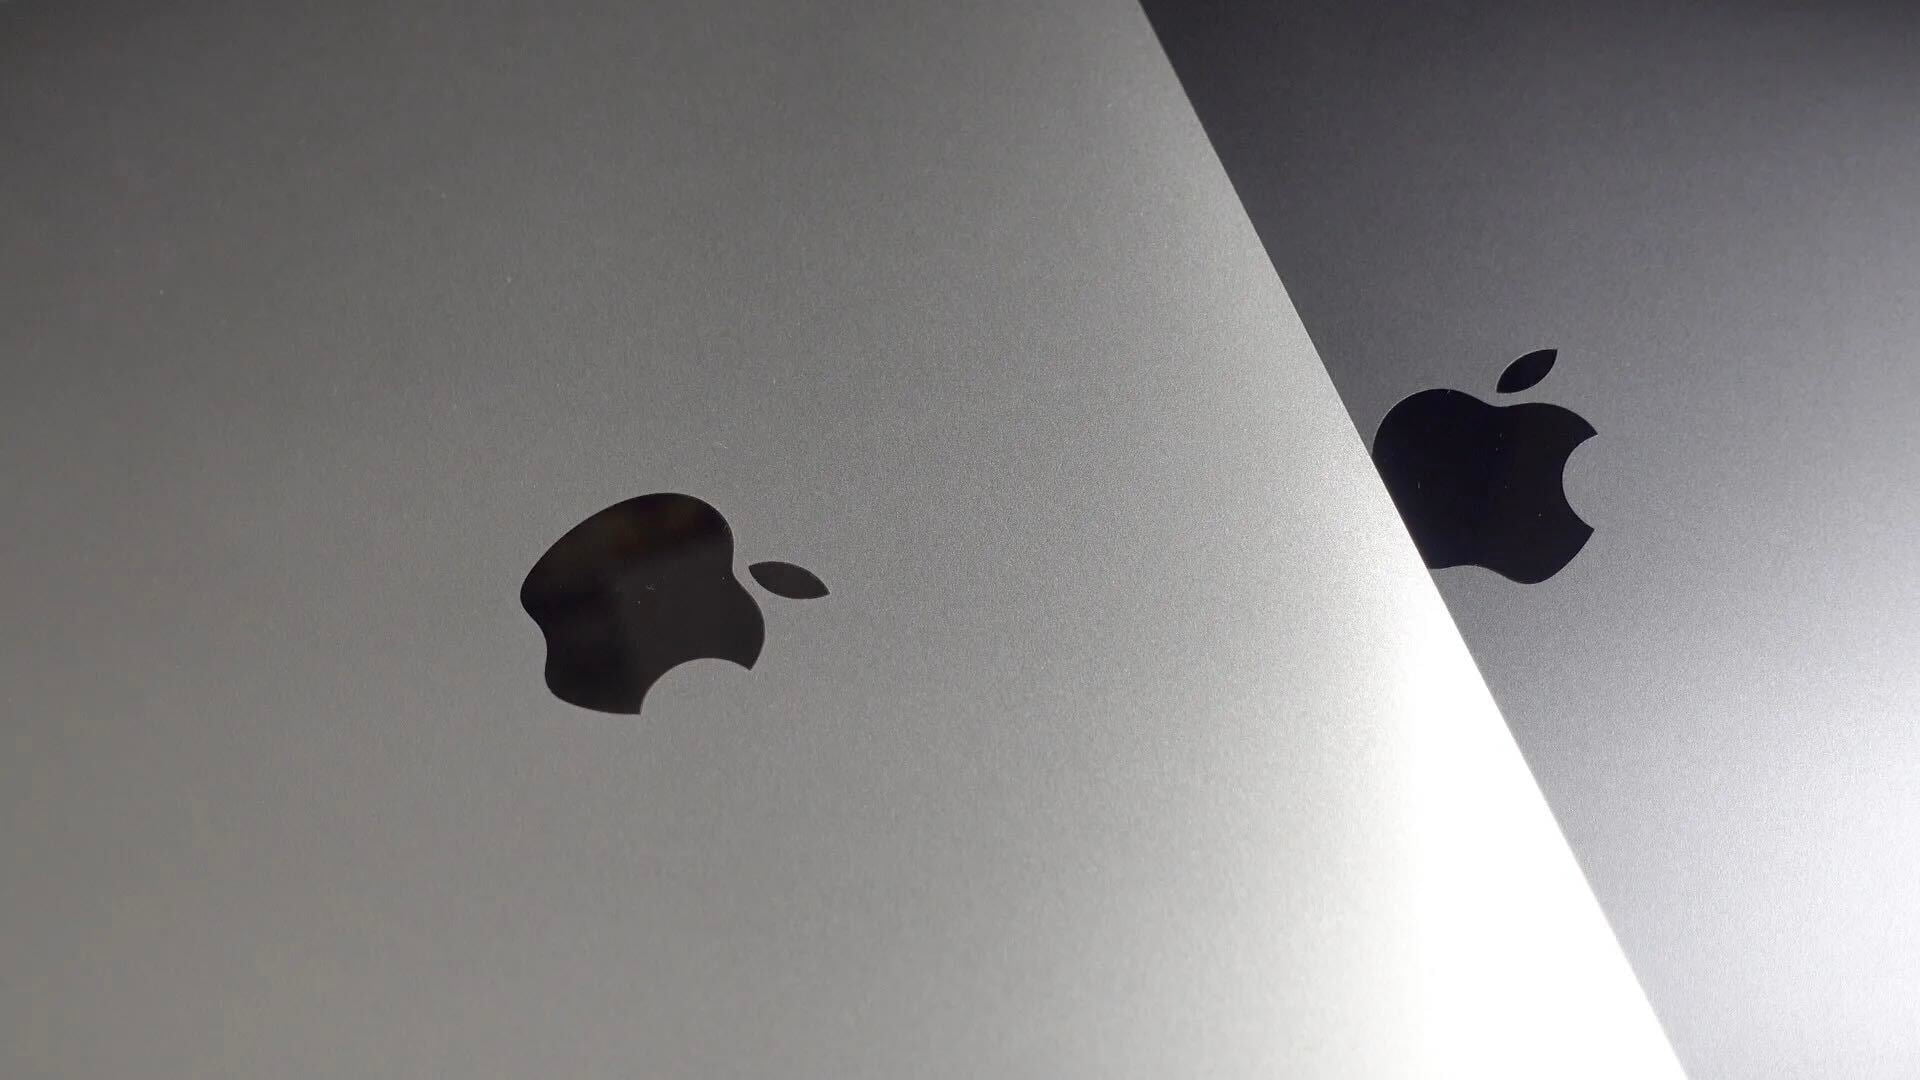 M1 MacBook Air vs Pro image of M1 chip